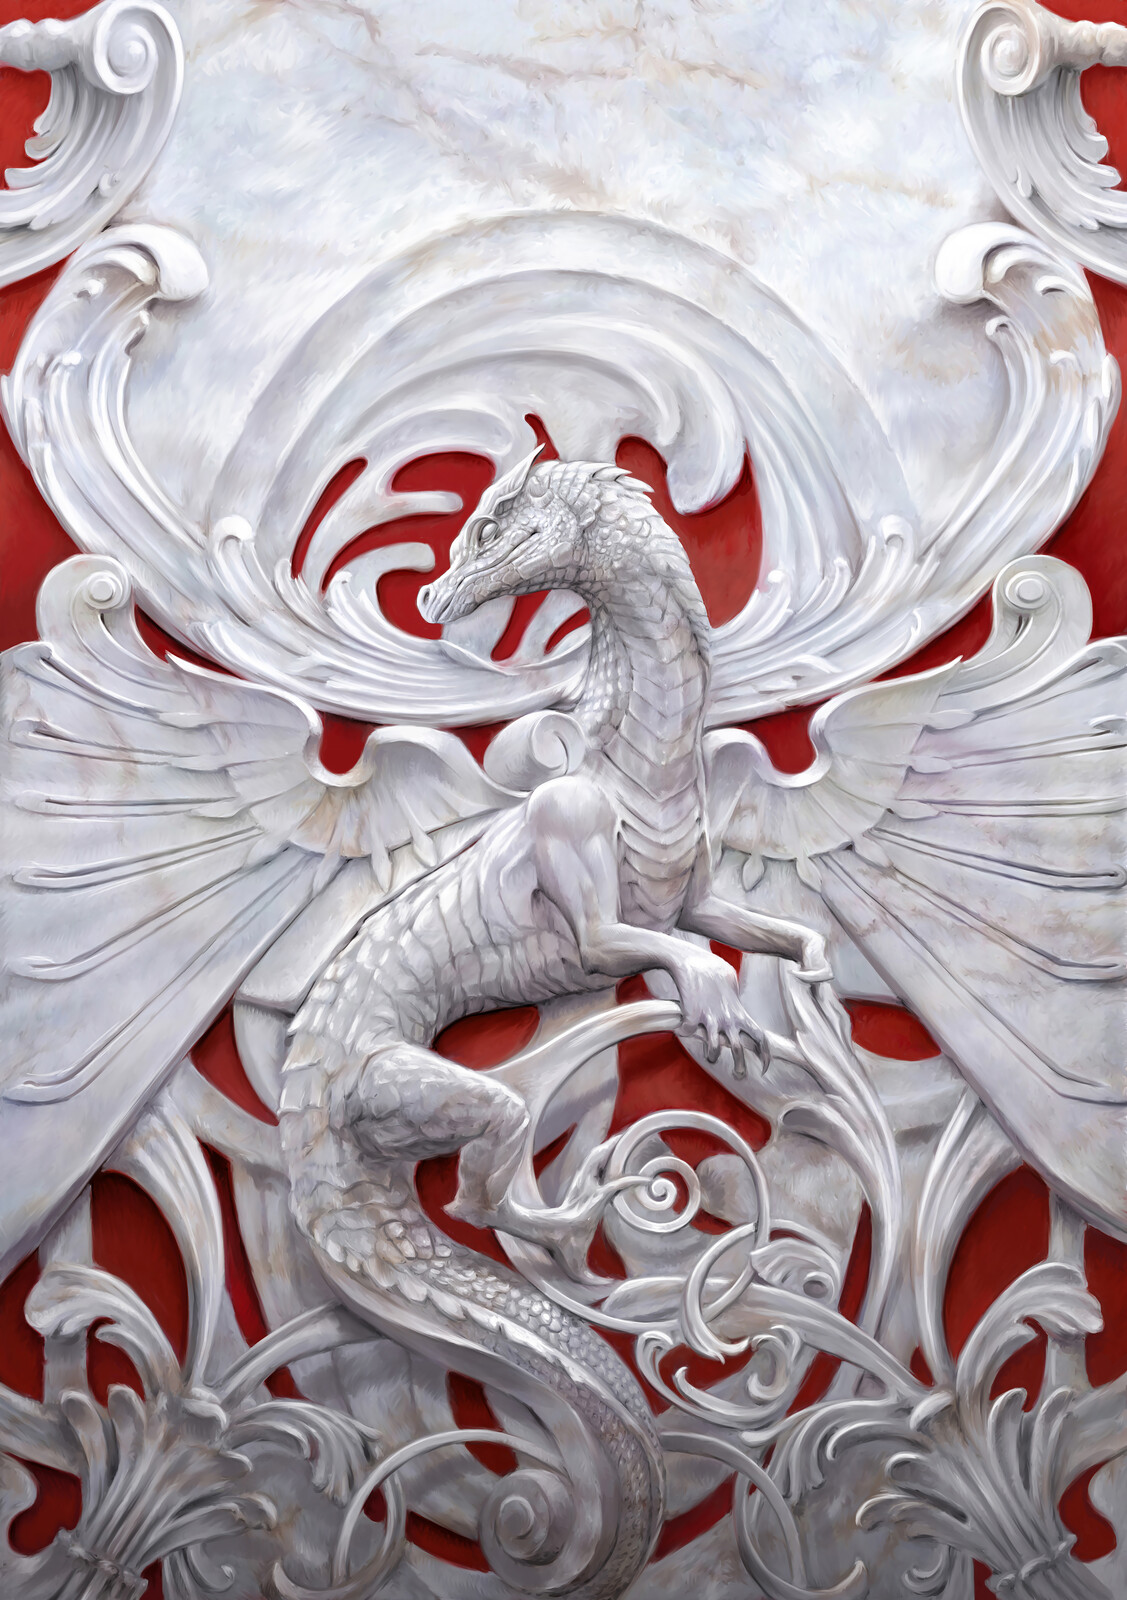 Front cover book digital painting  2021 La canzone del drago